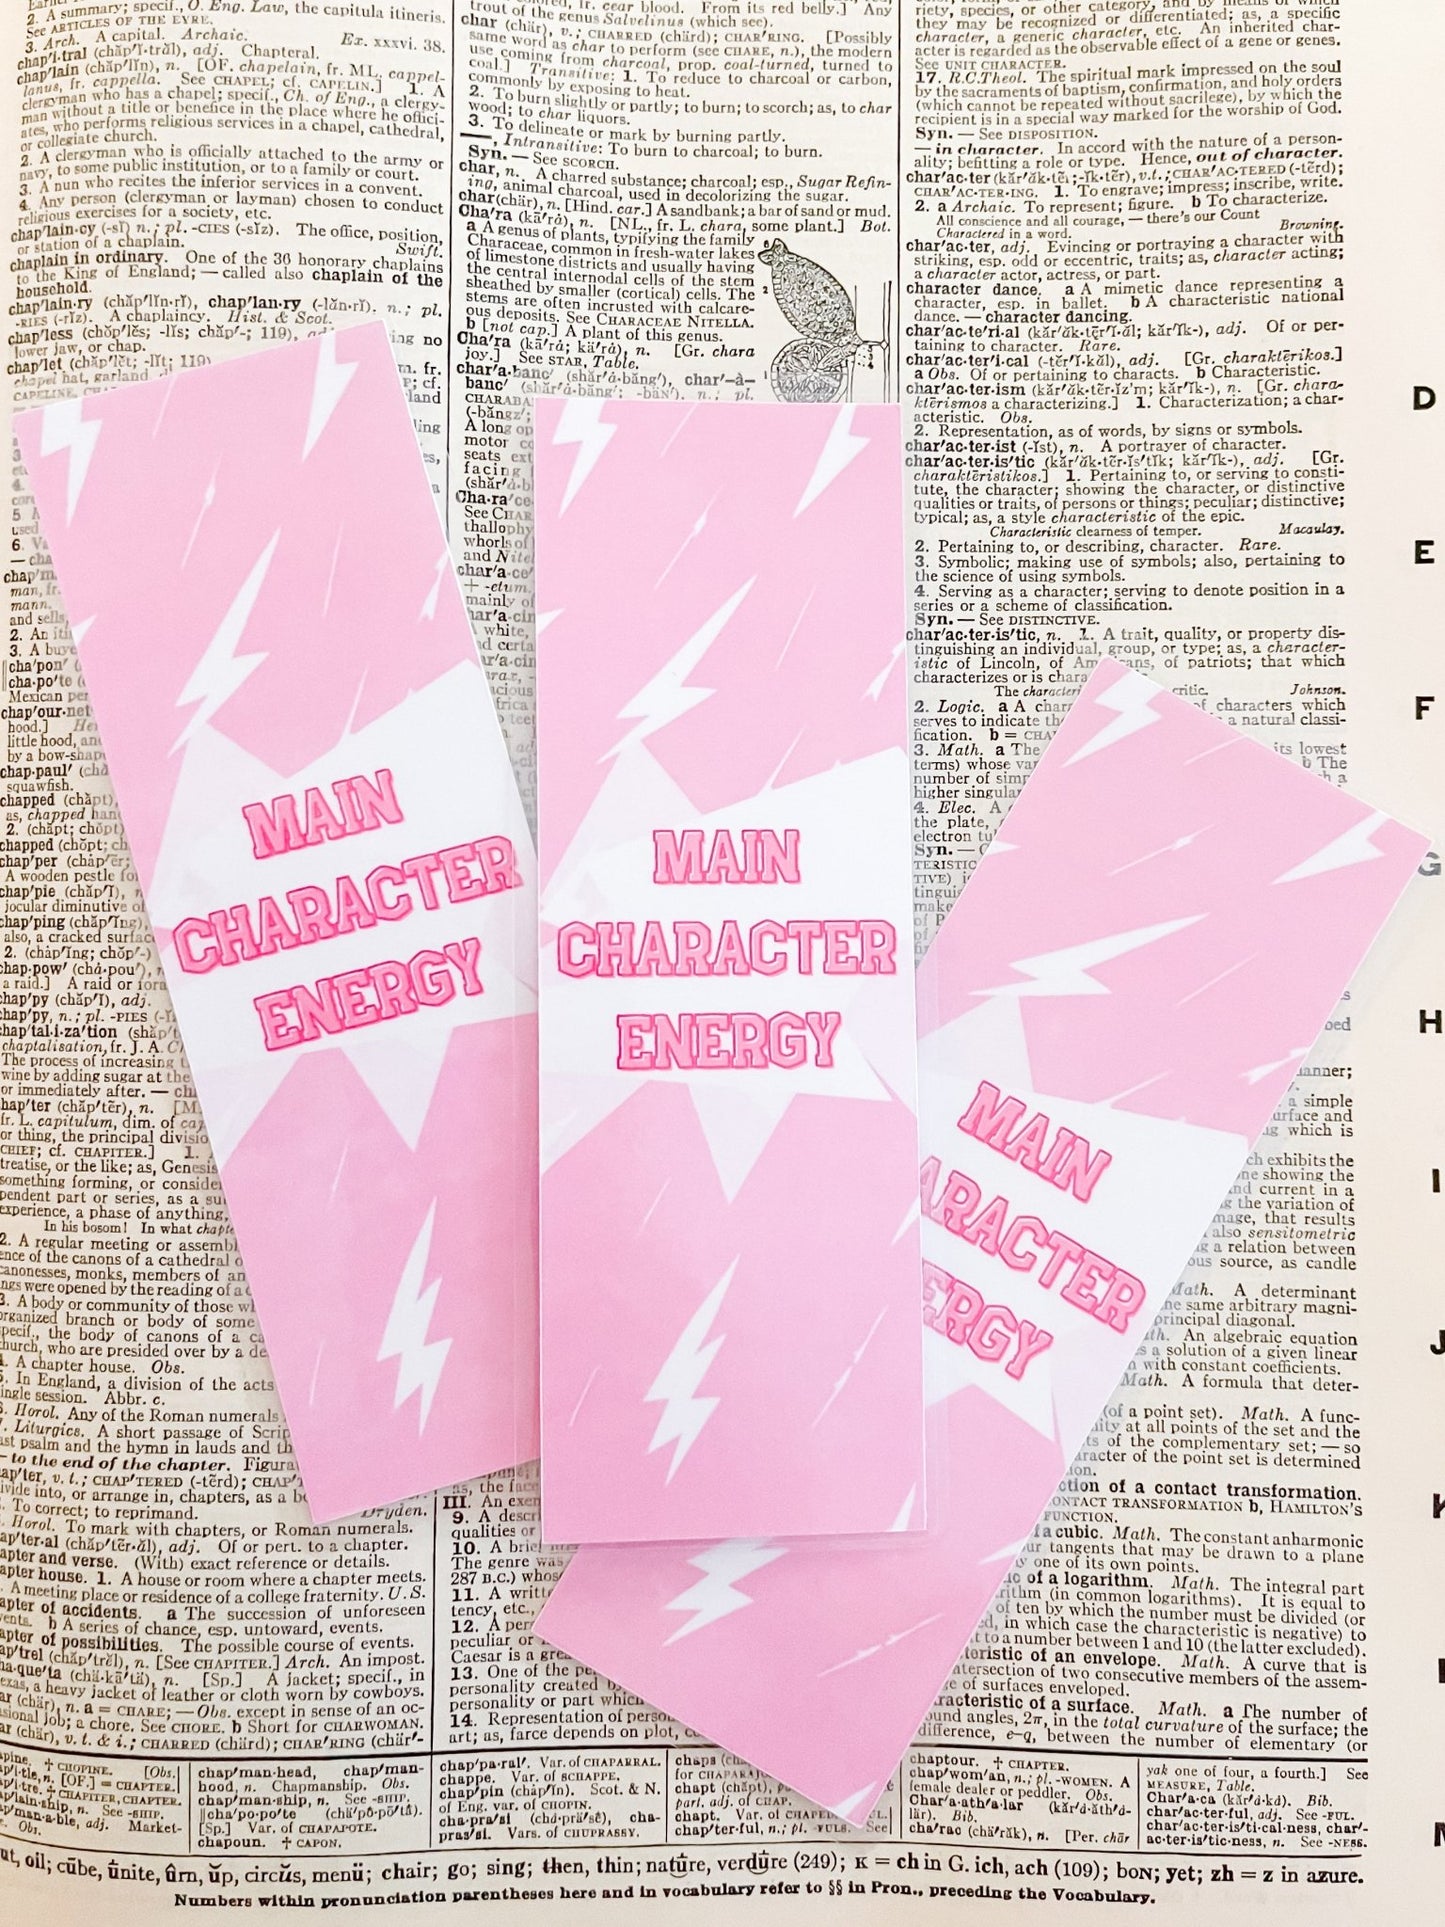 Main Character Energy Bookmark - Designs by Lauren Ann